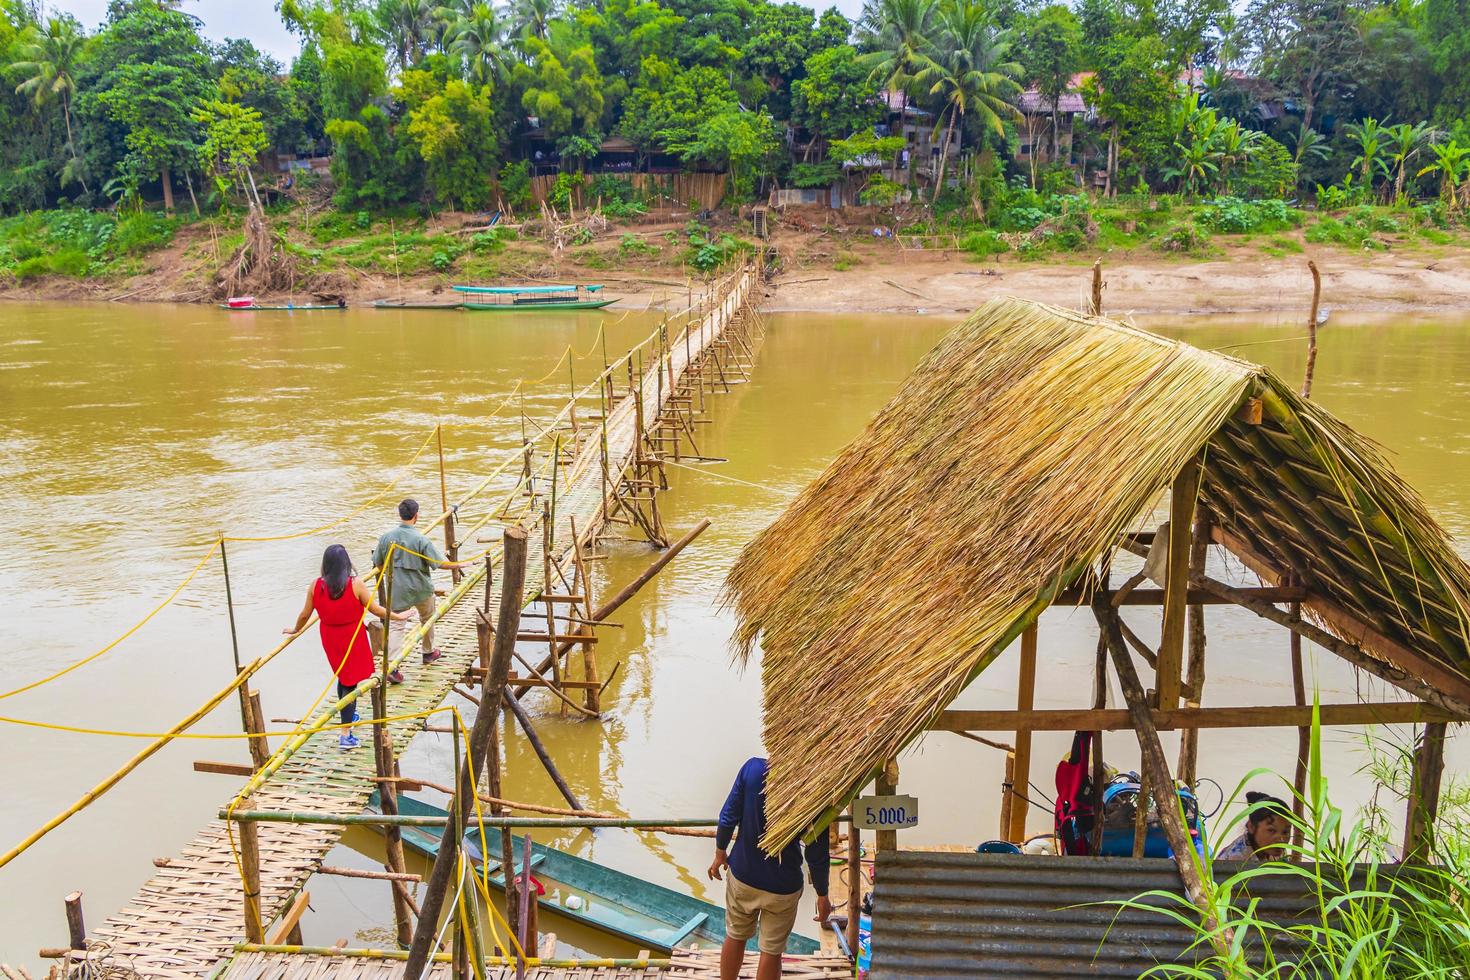 luang prabang, laos 2018- bienvenido al puente de bambú del río mekong luang prabang laos foto